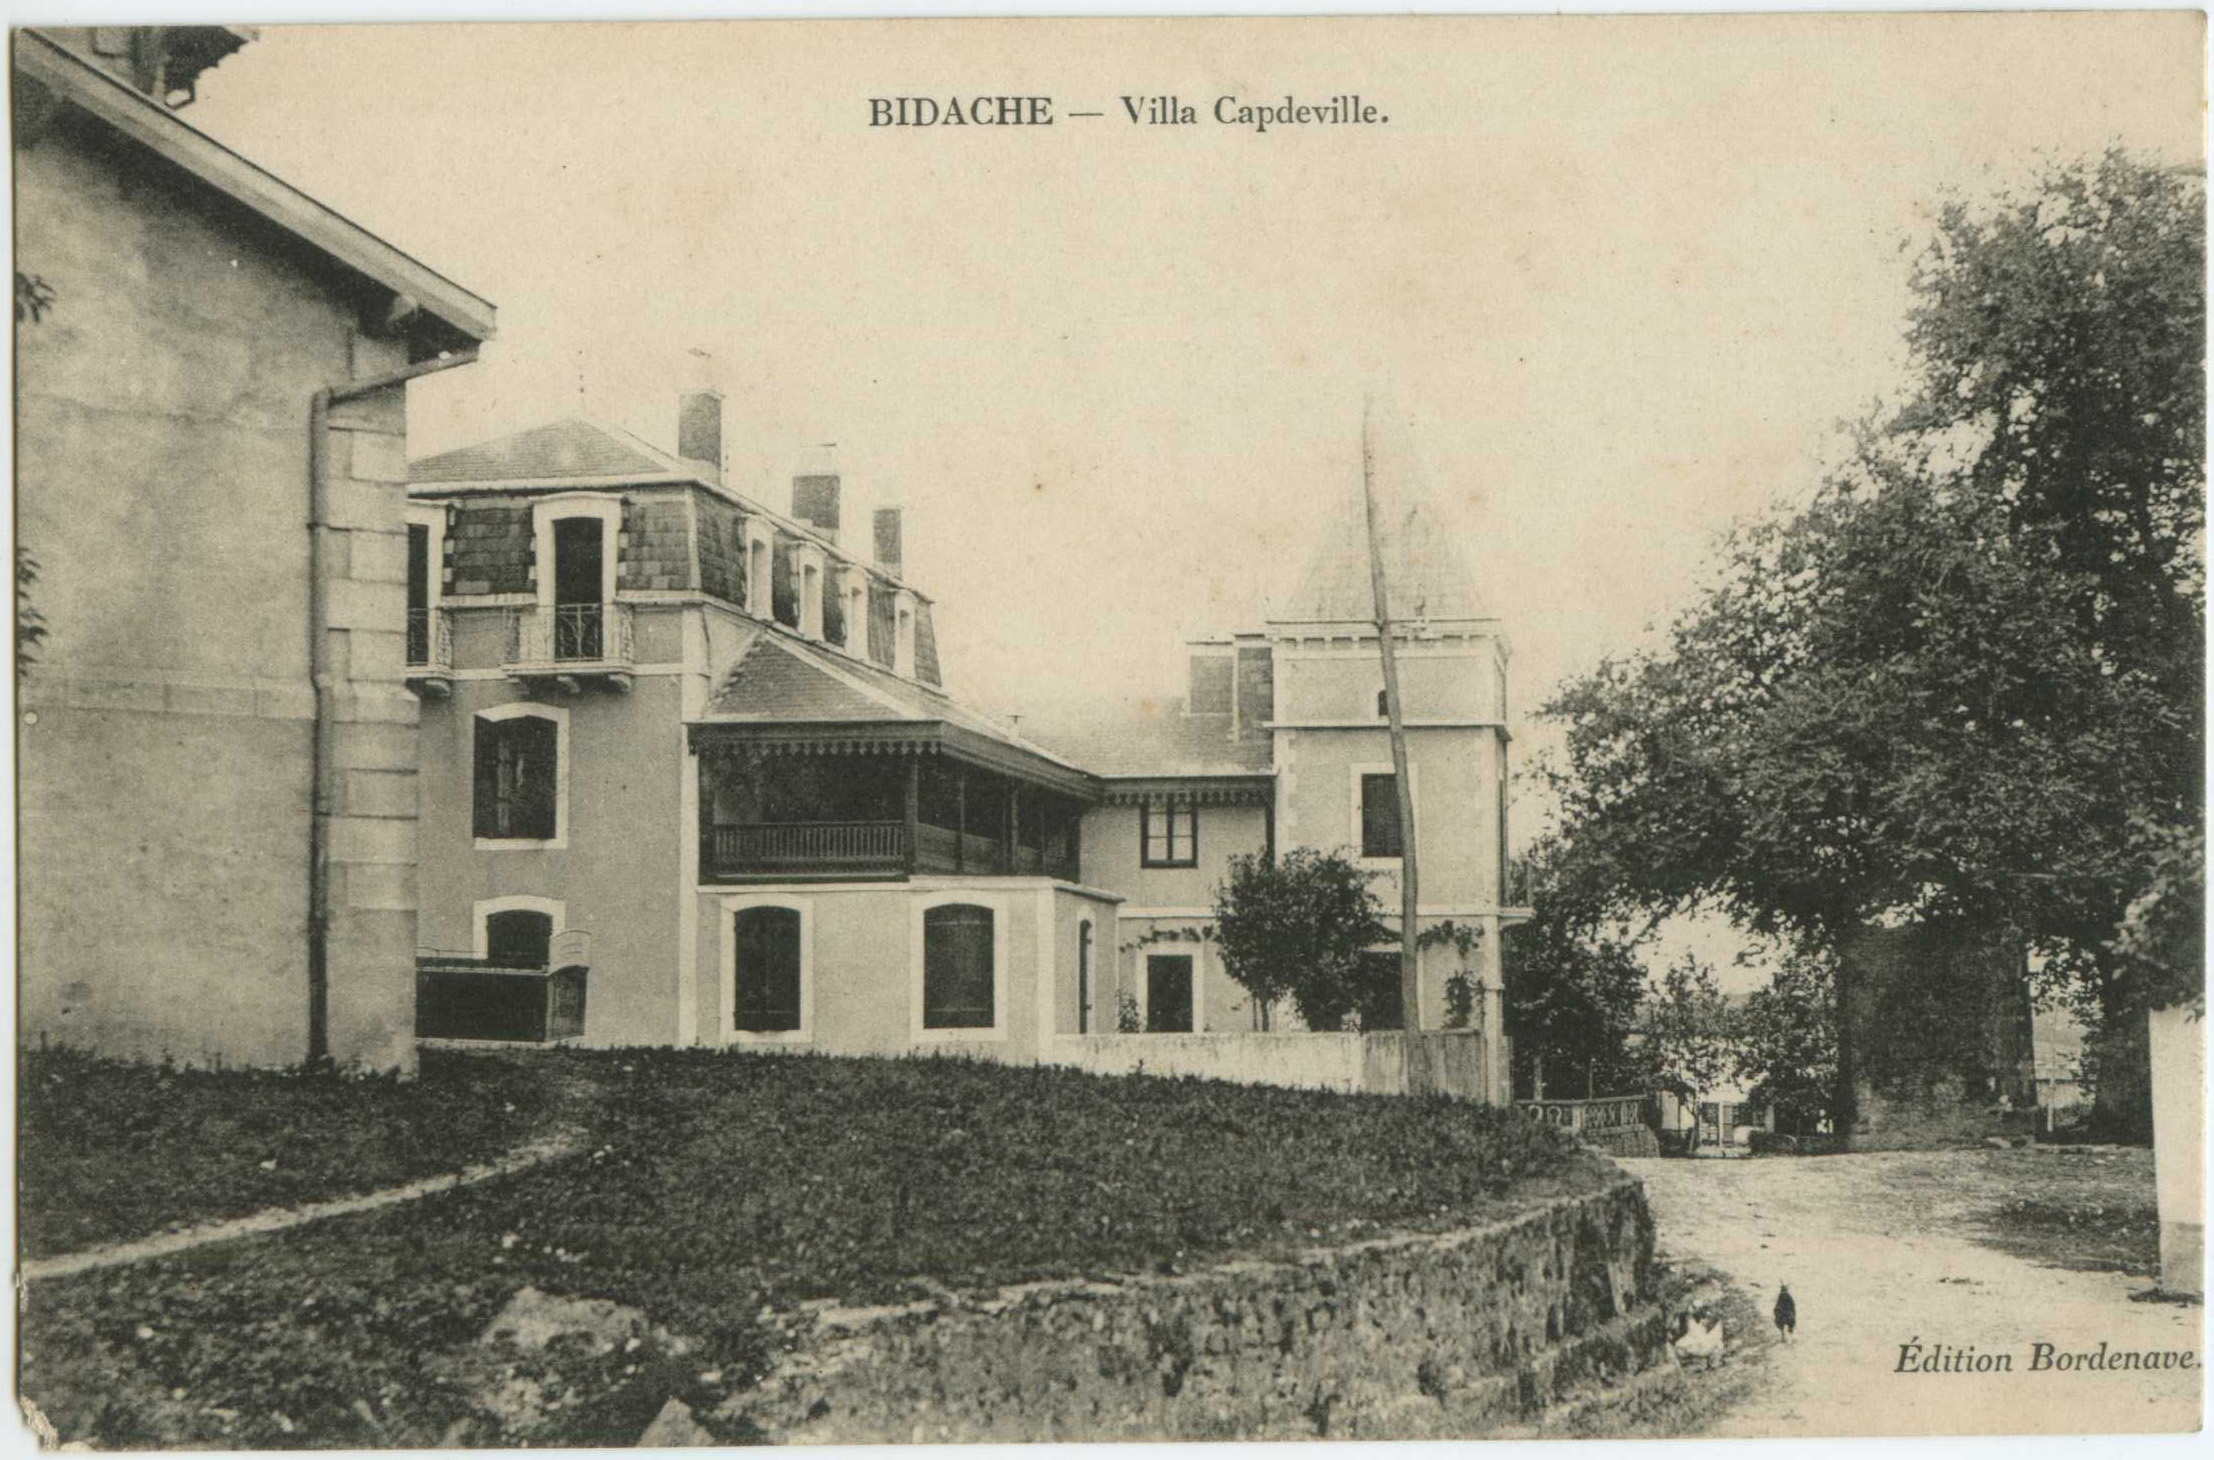 Bidache - Villa Capdeville